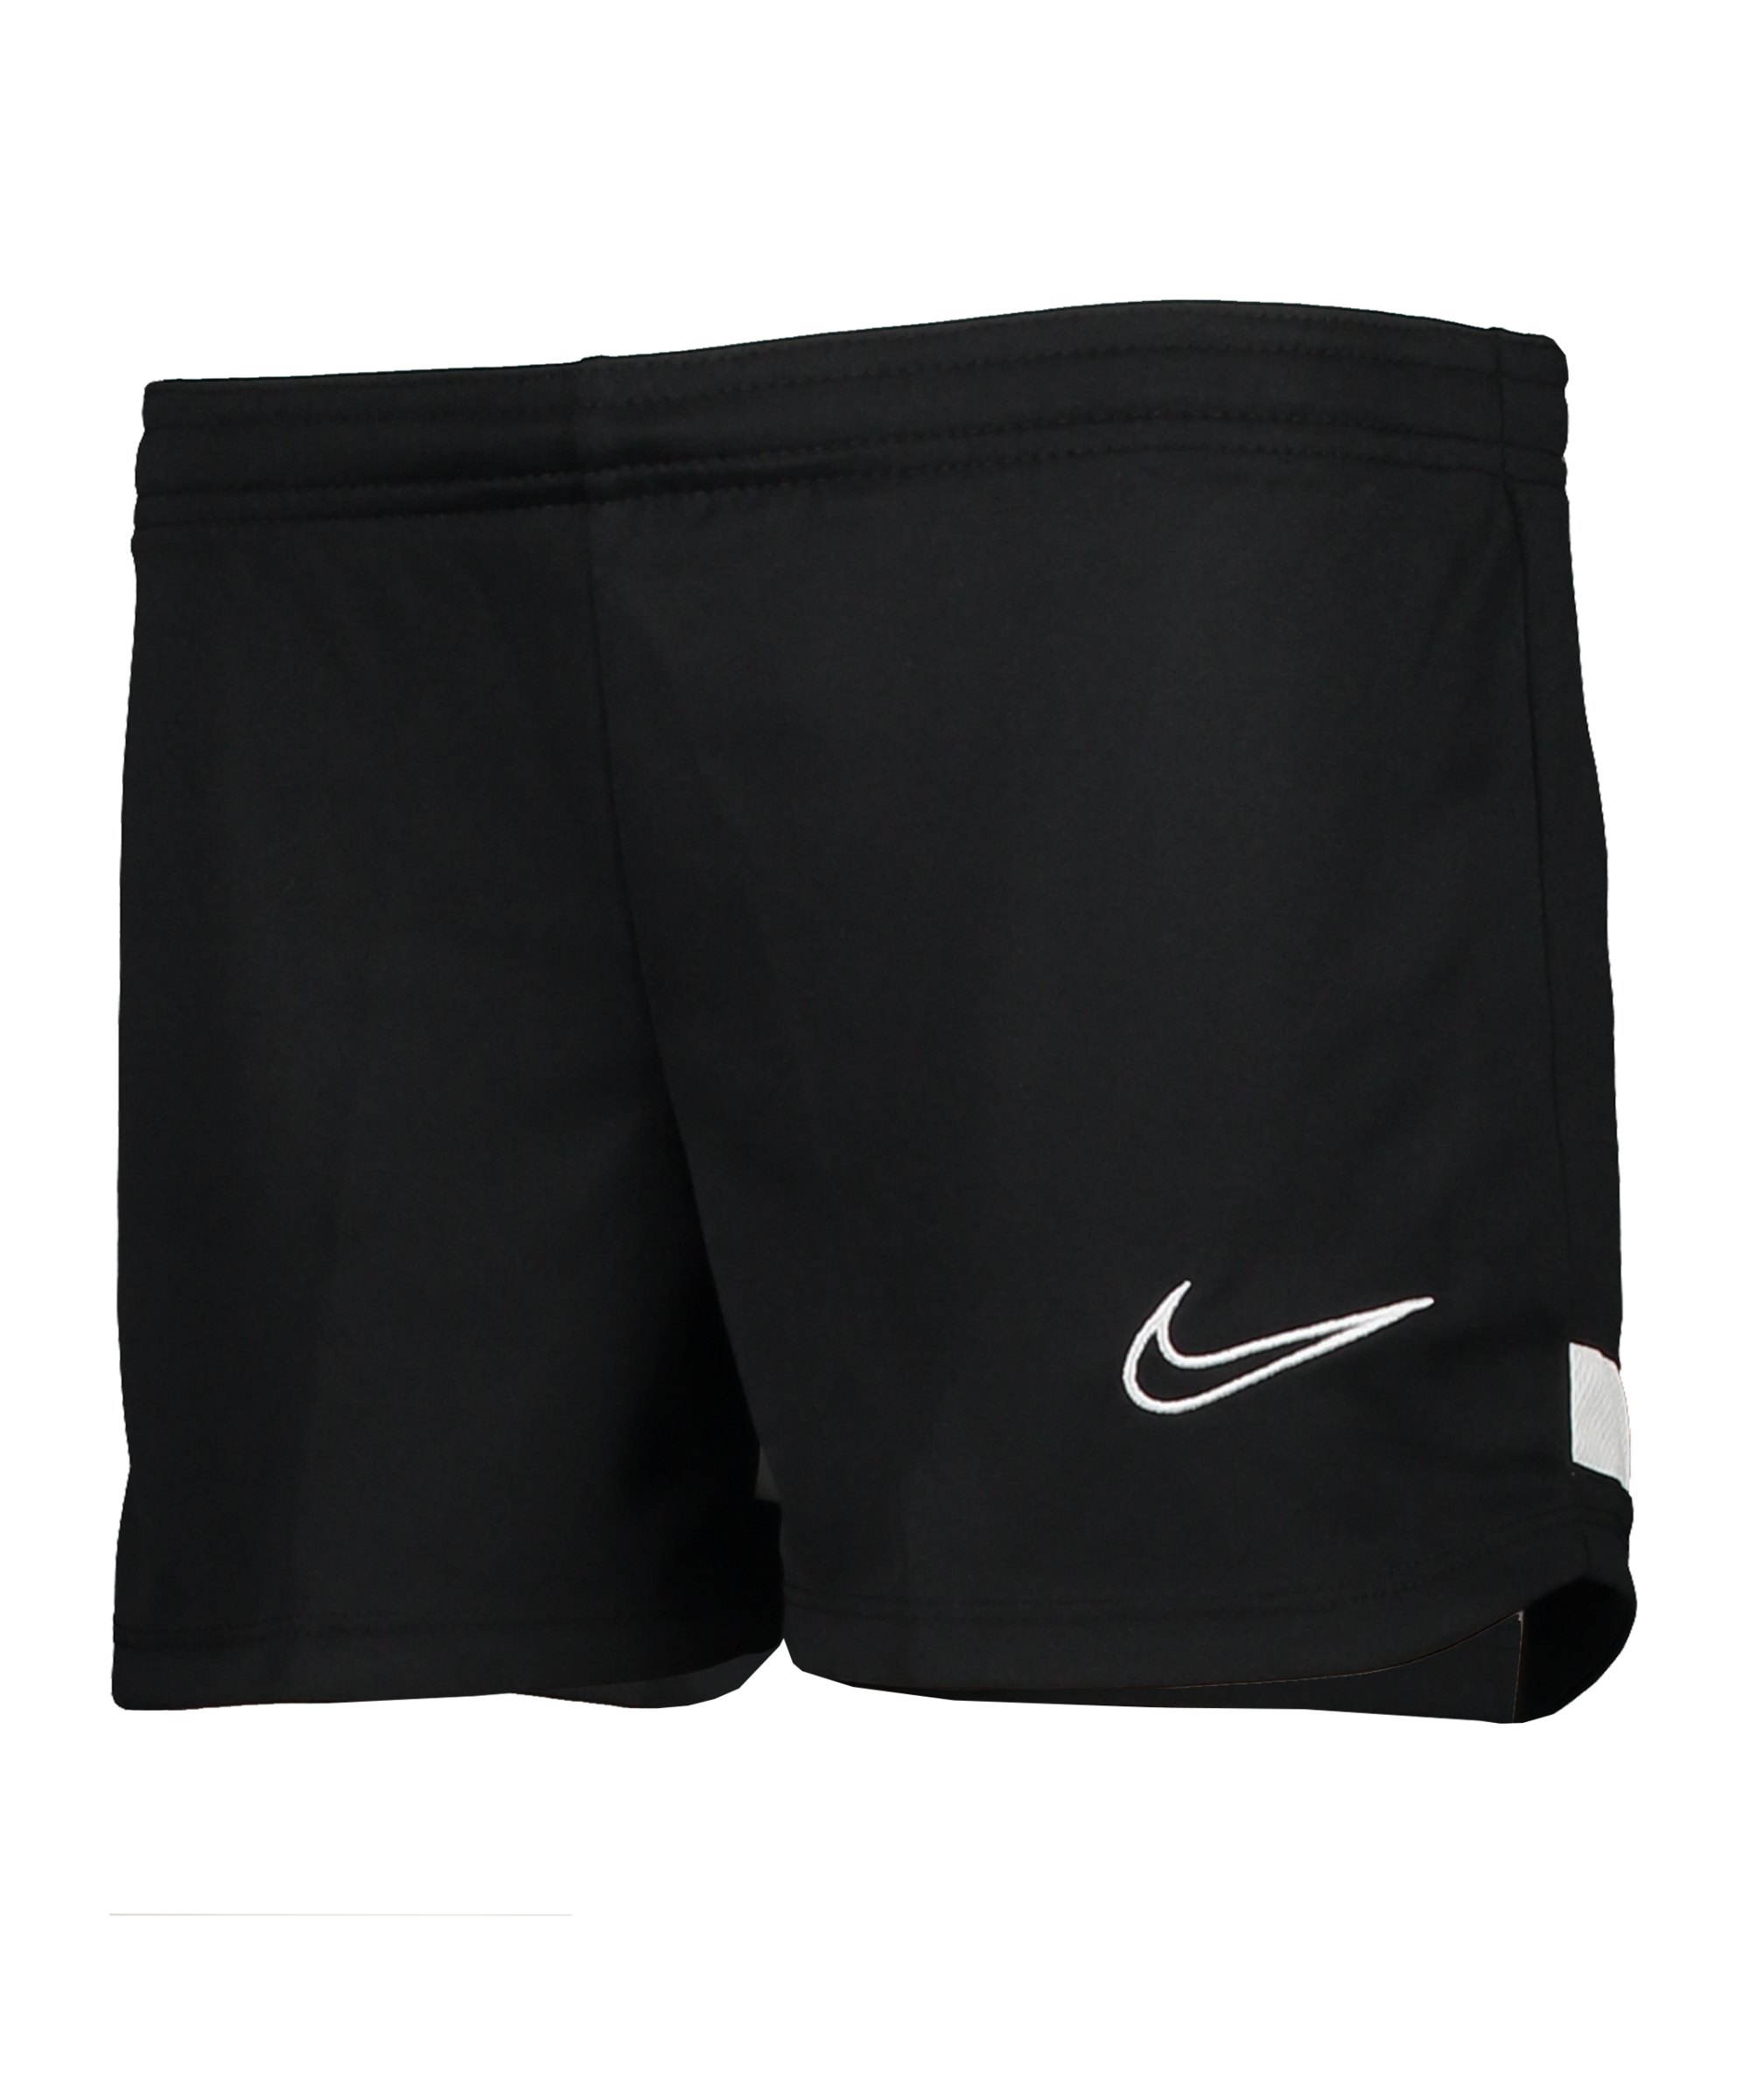 Nike Academy Soccer Short Kids Schwarz Weiss F010 - schwarz